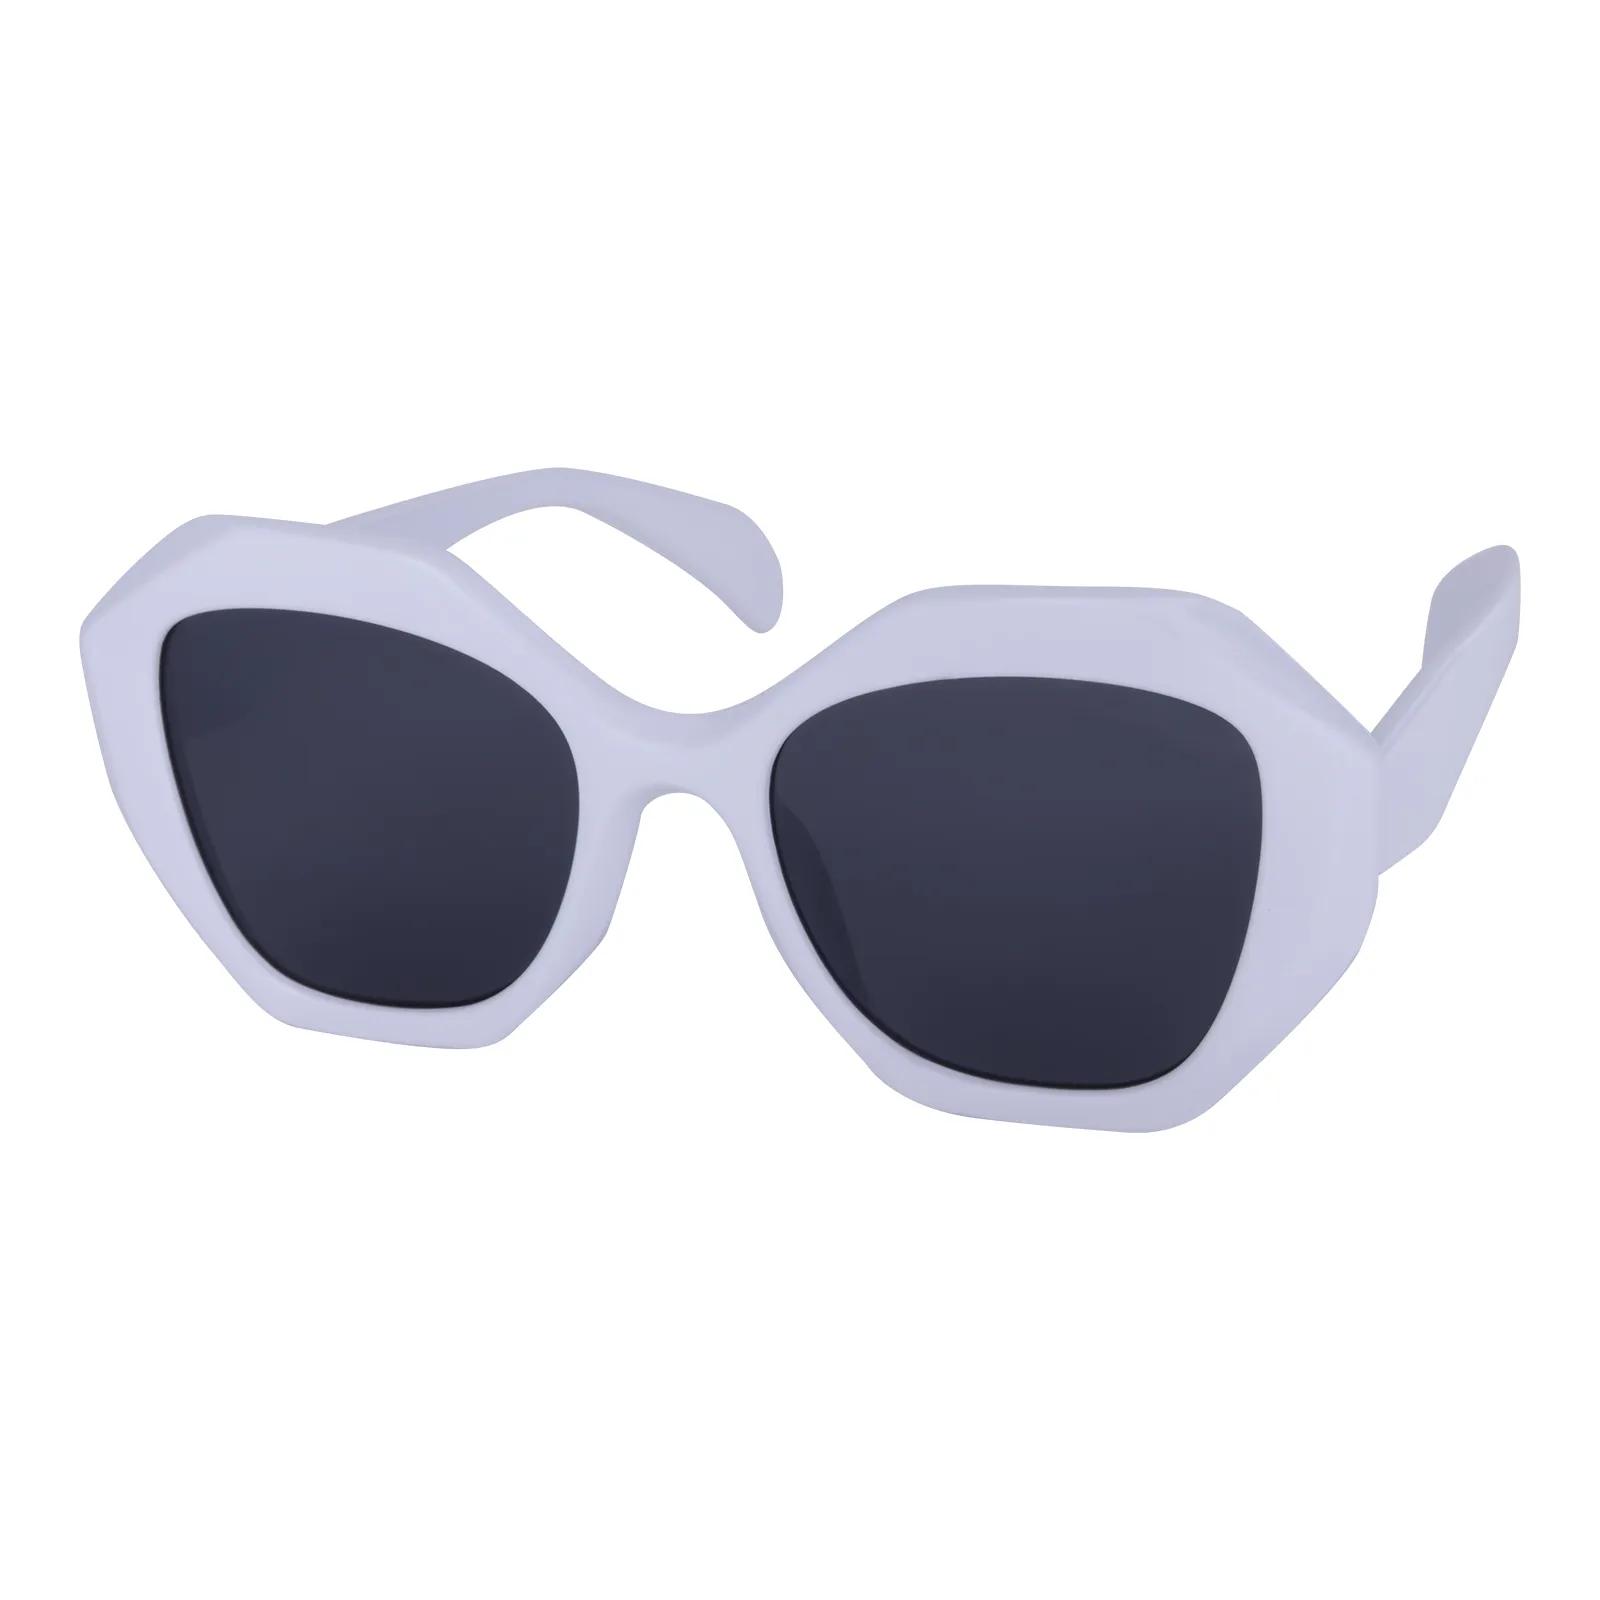 Bridget - Geometric White Sunglasses for Women